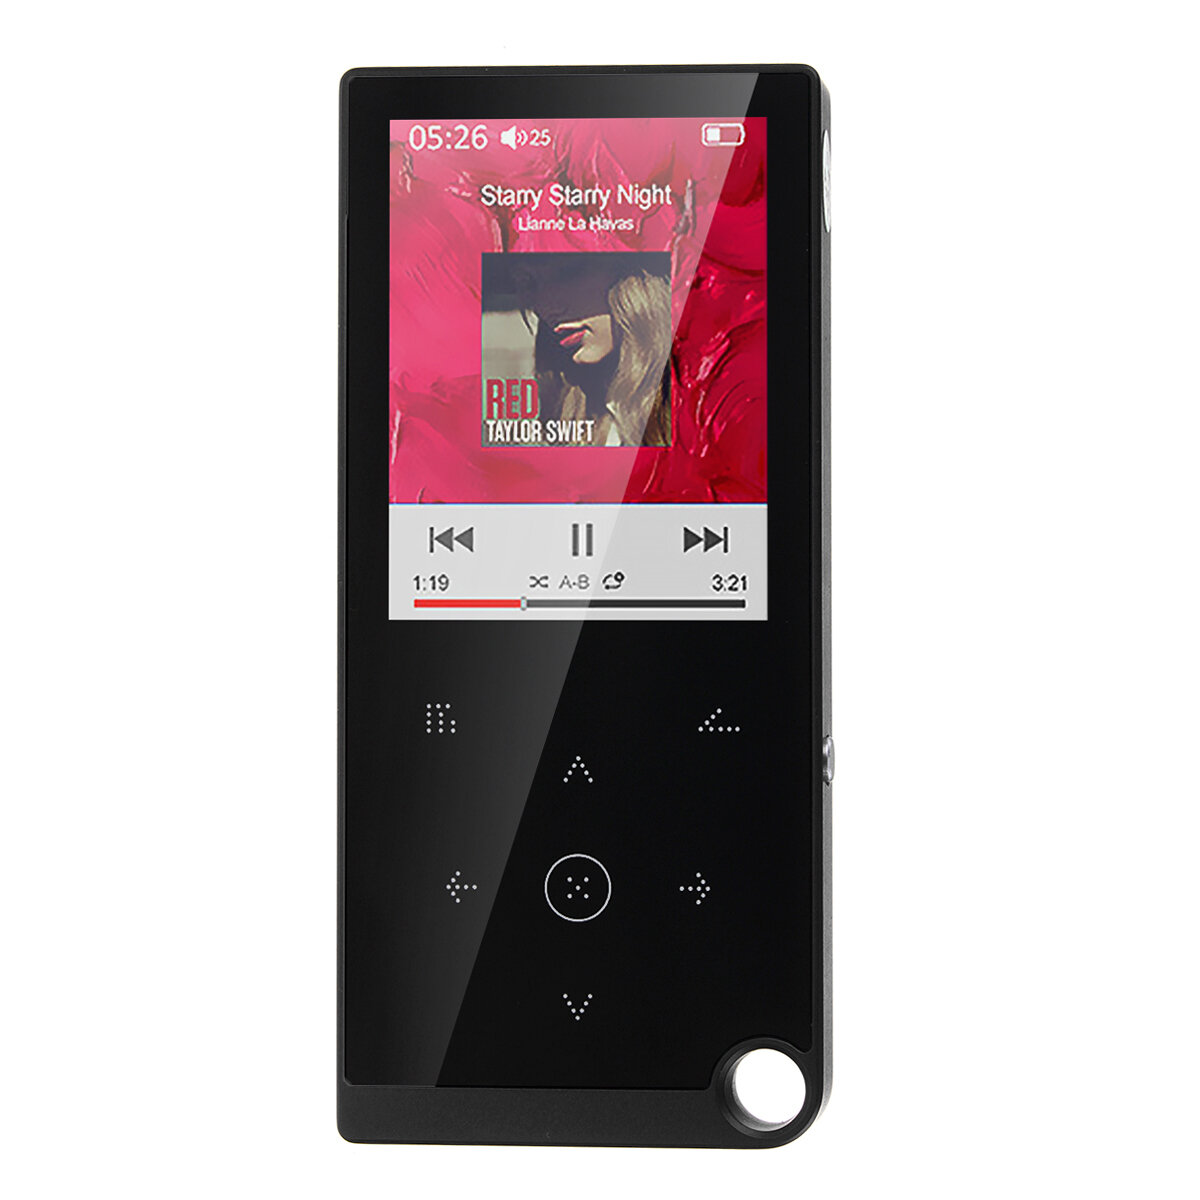 16GB 2.4 inch bluetooth MP3 Player Built-in Speaker Music Player HD Recording Ebook FM Radio